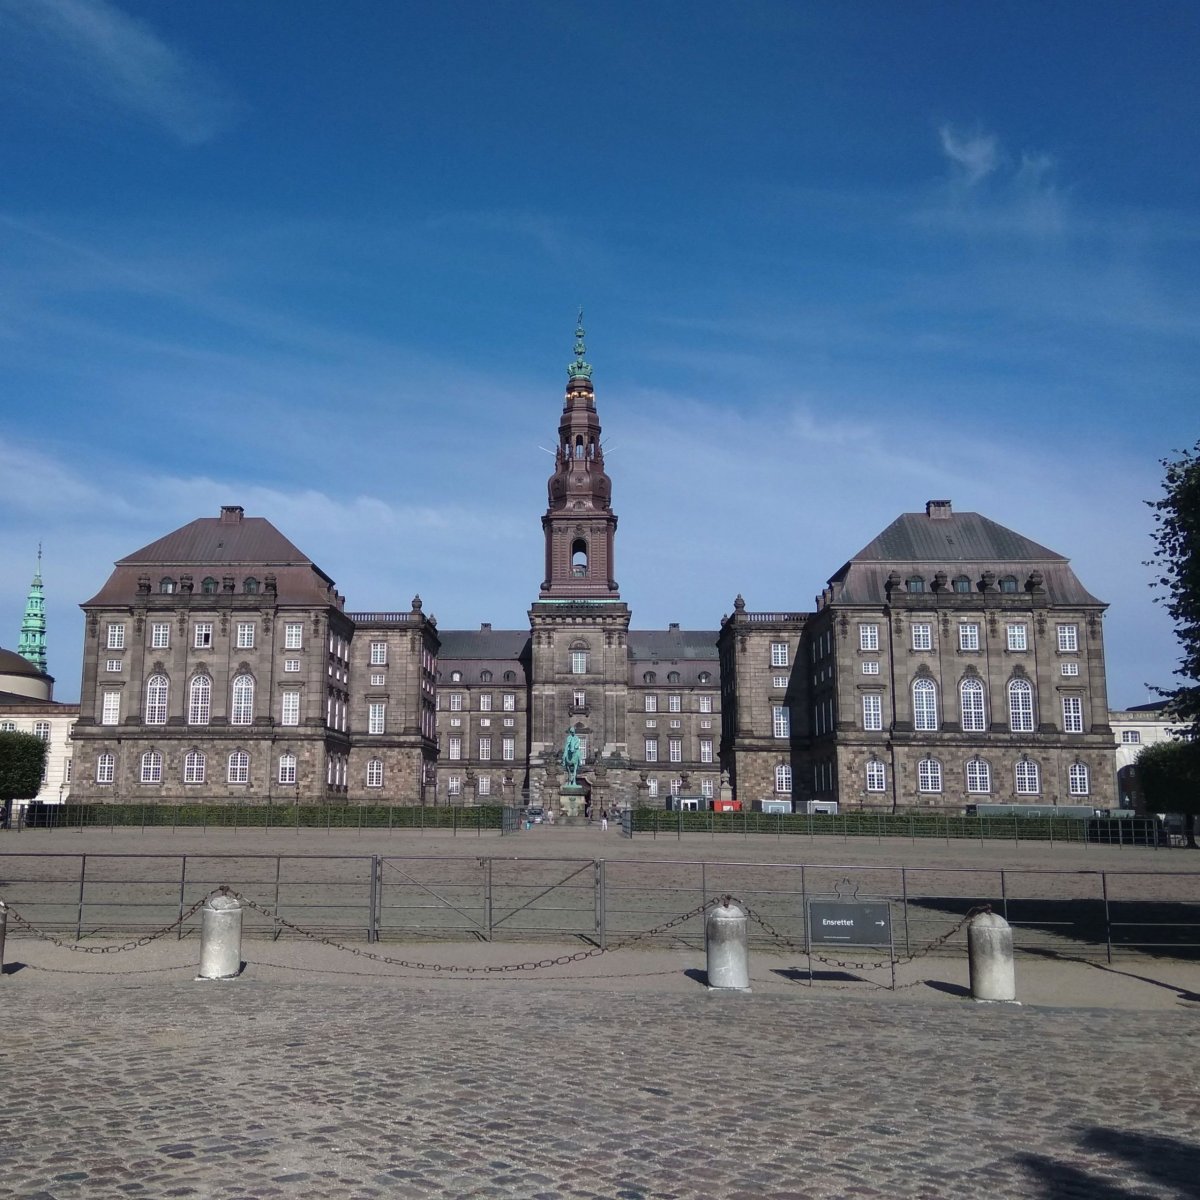 Dominanta města - Christiansborg.